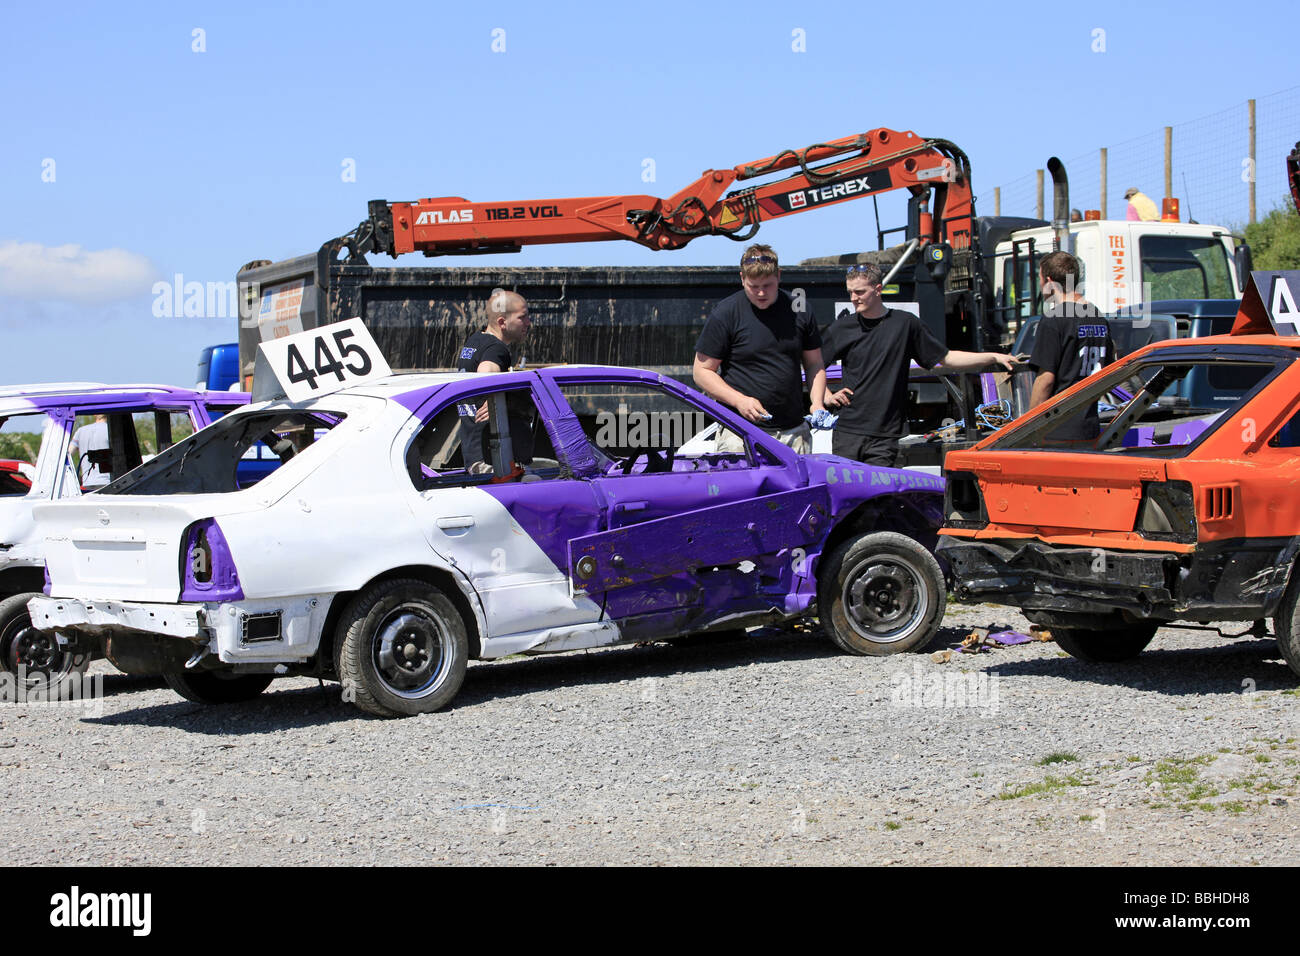 Banger Racing cars at a track meet Stock Photo